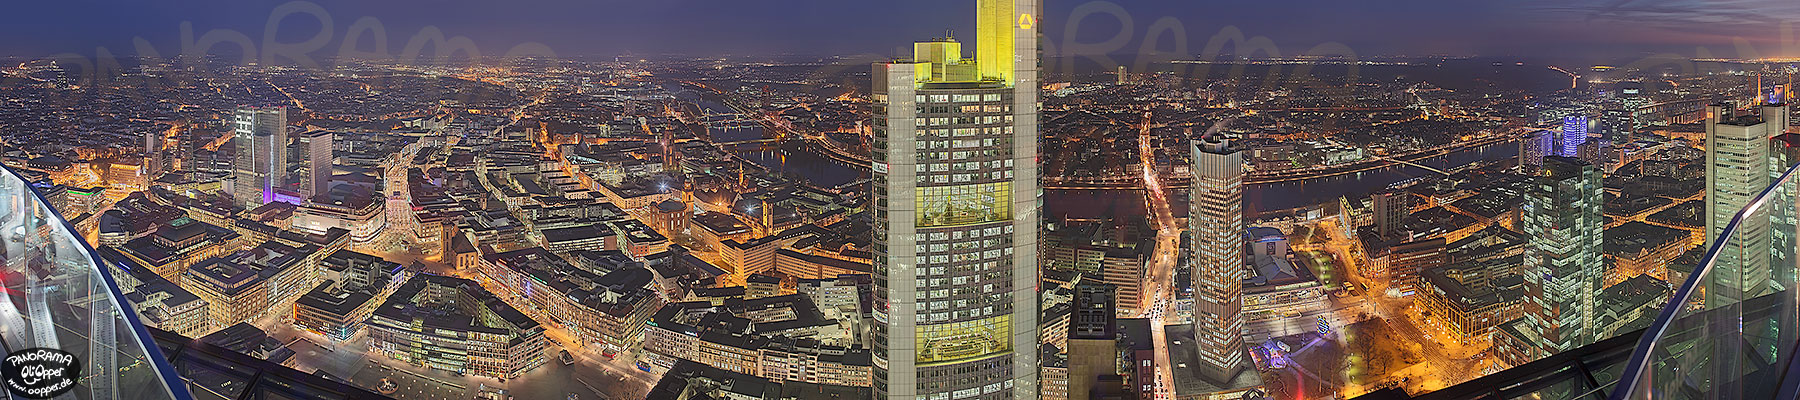 Frankfurt - Maintower - s�d - p460 - (c) by Oliver Opper